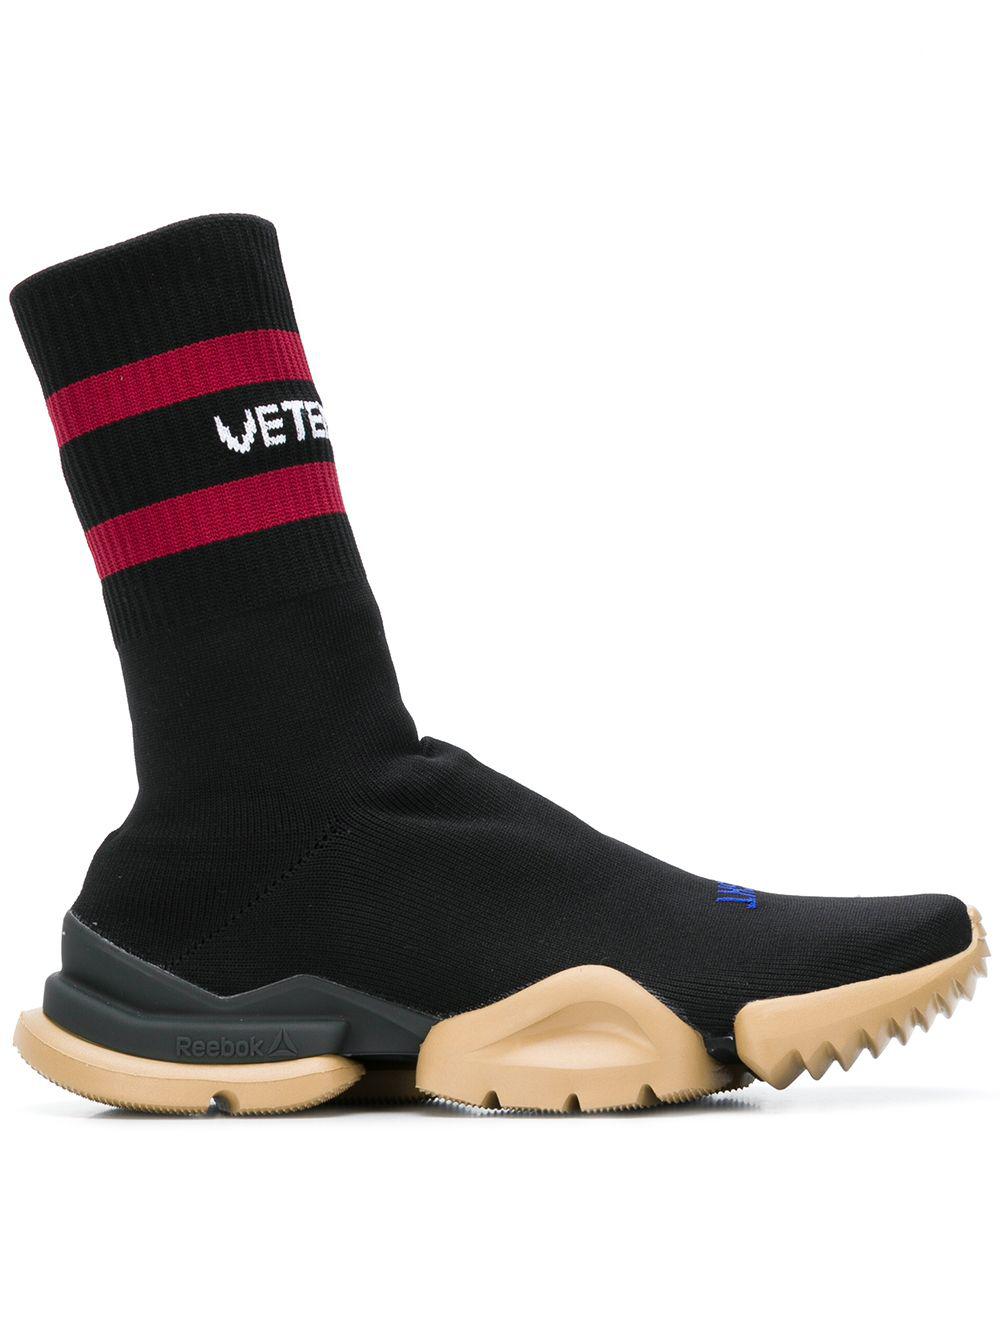 Vetements X Reebok Classic Sock 